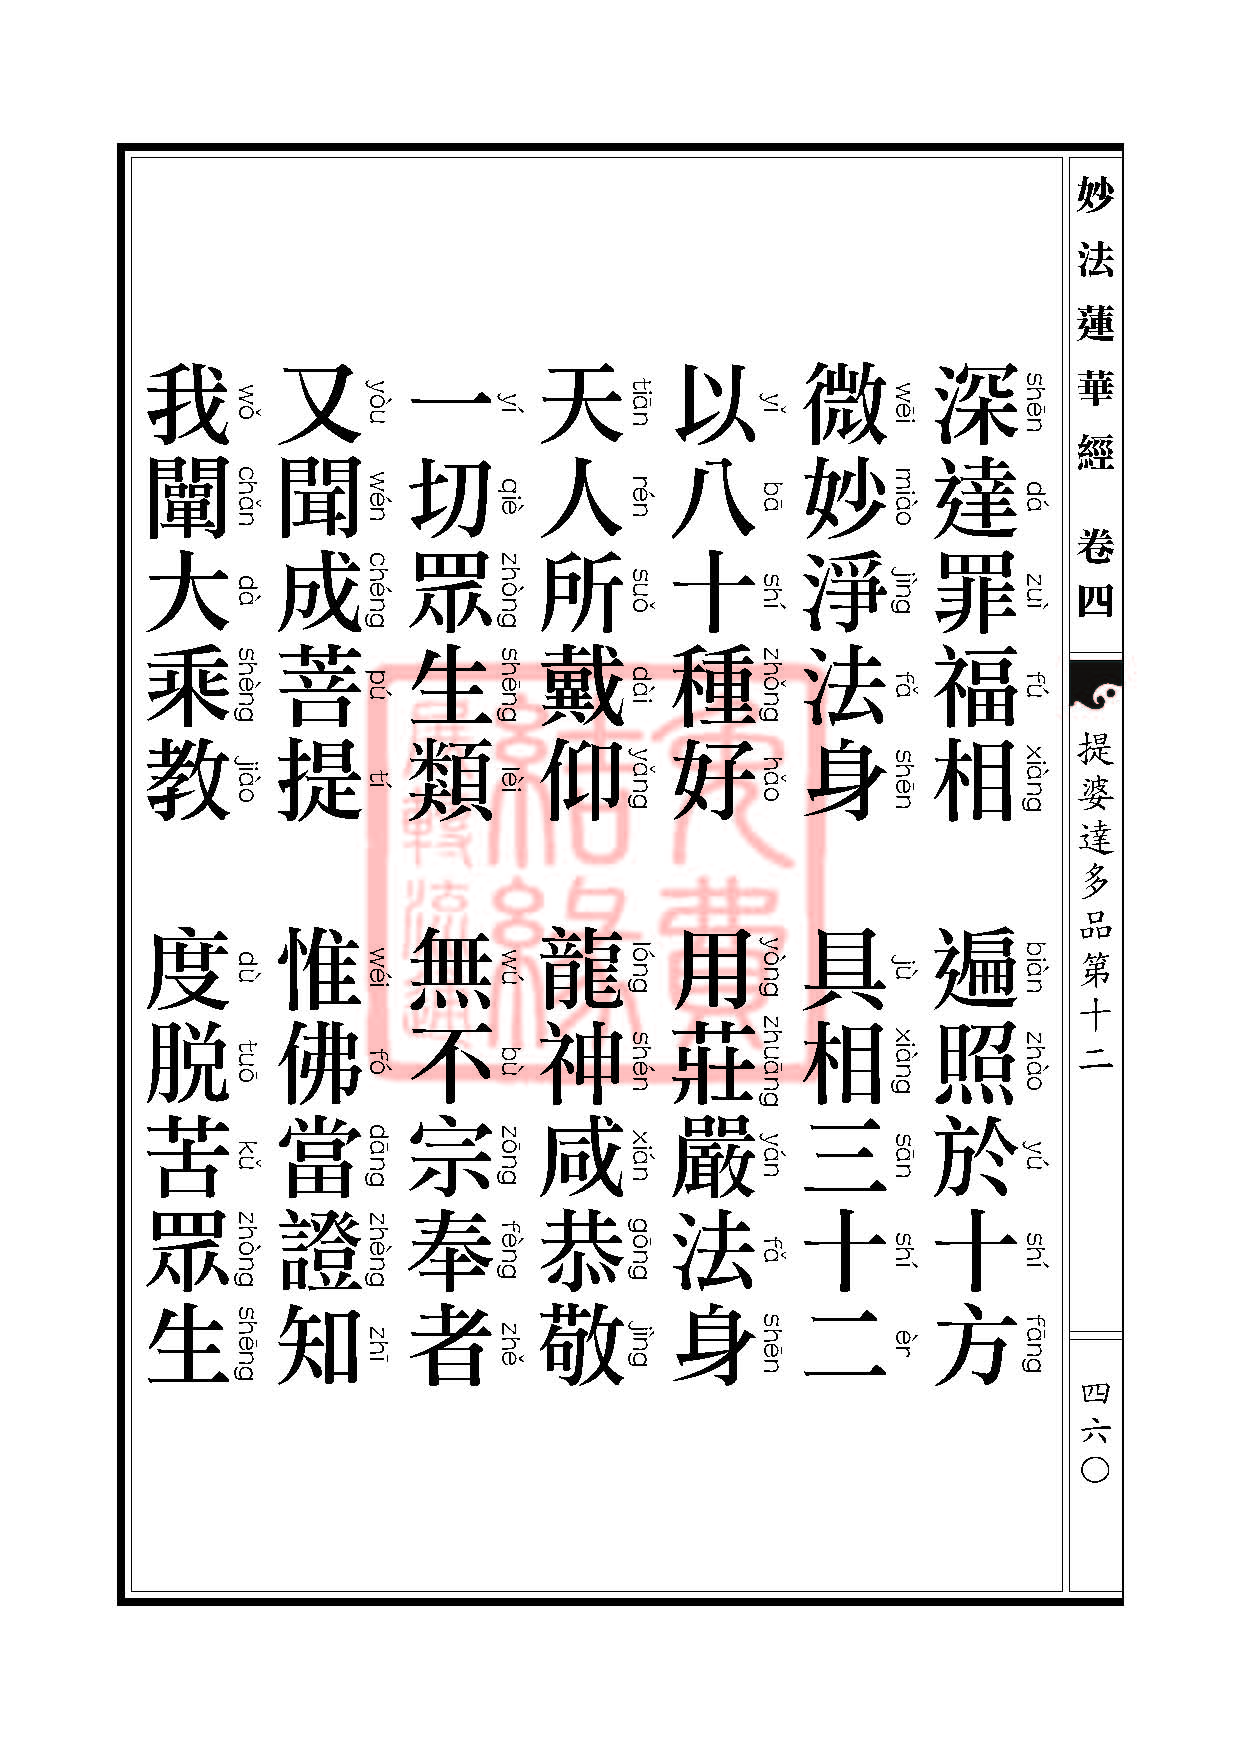 Book_FHJ_HK-A6-PY_Web_页面_460.jpg